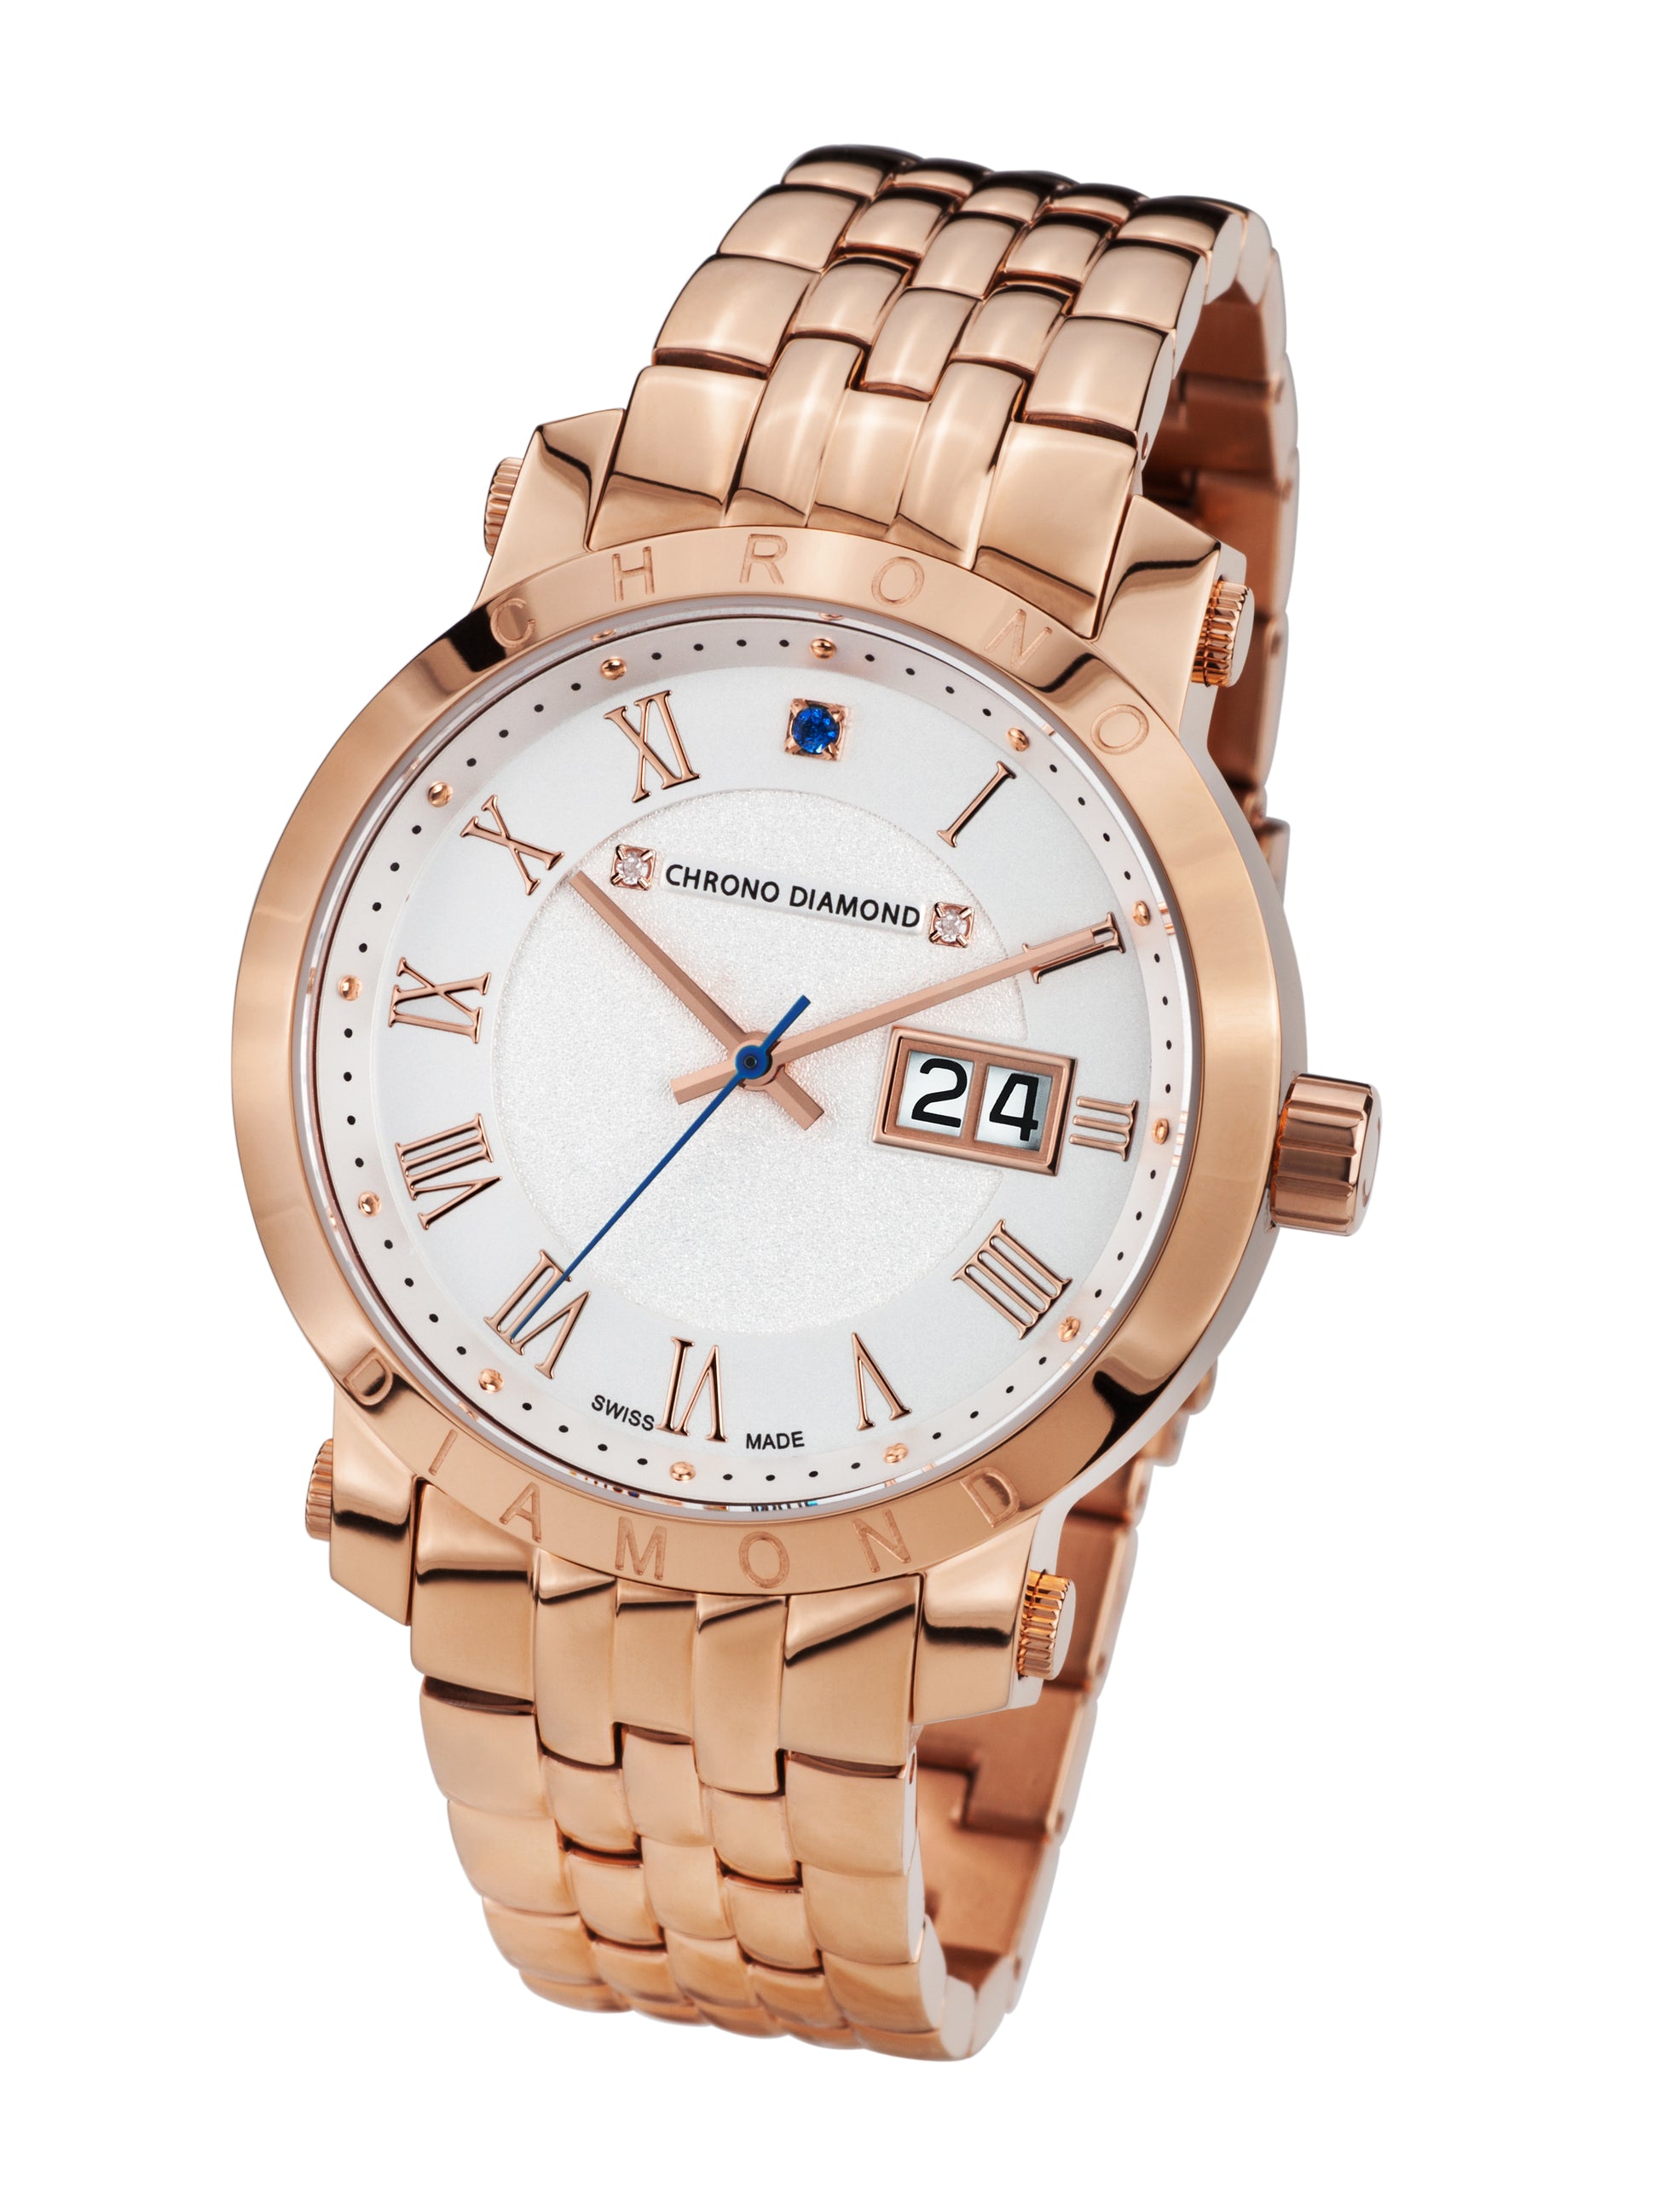 Automatic watches — Nestorius — Chrono Diamond — rosegold IP